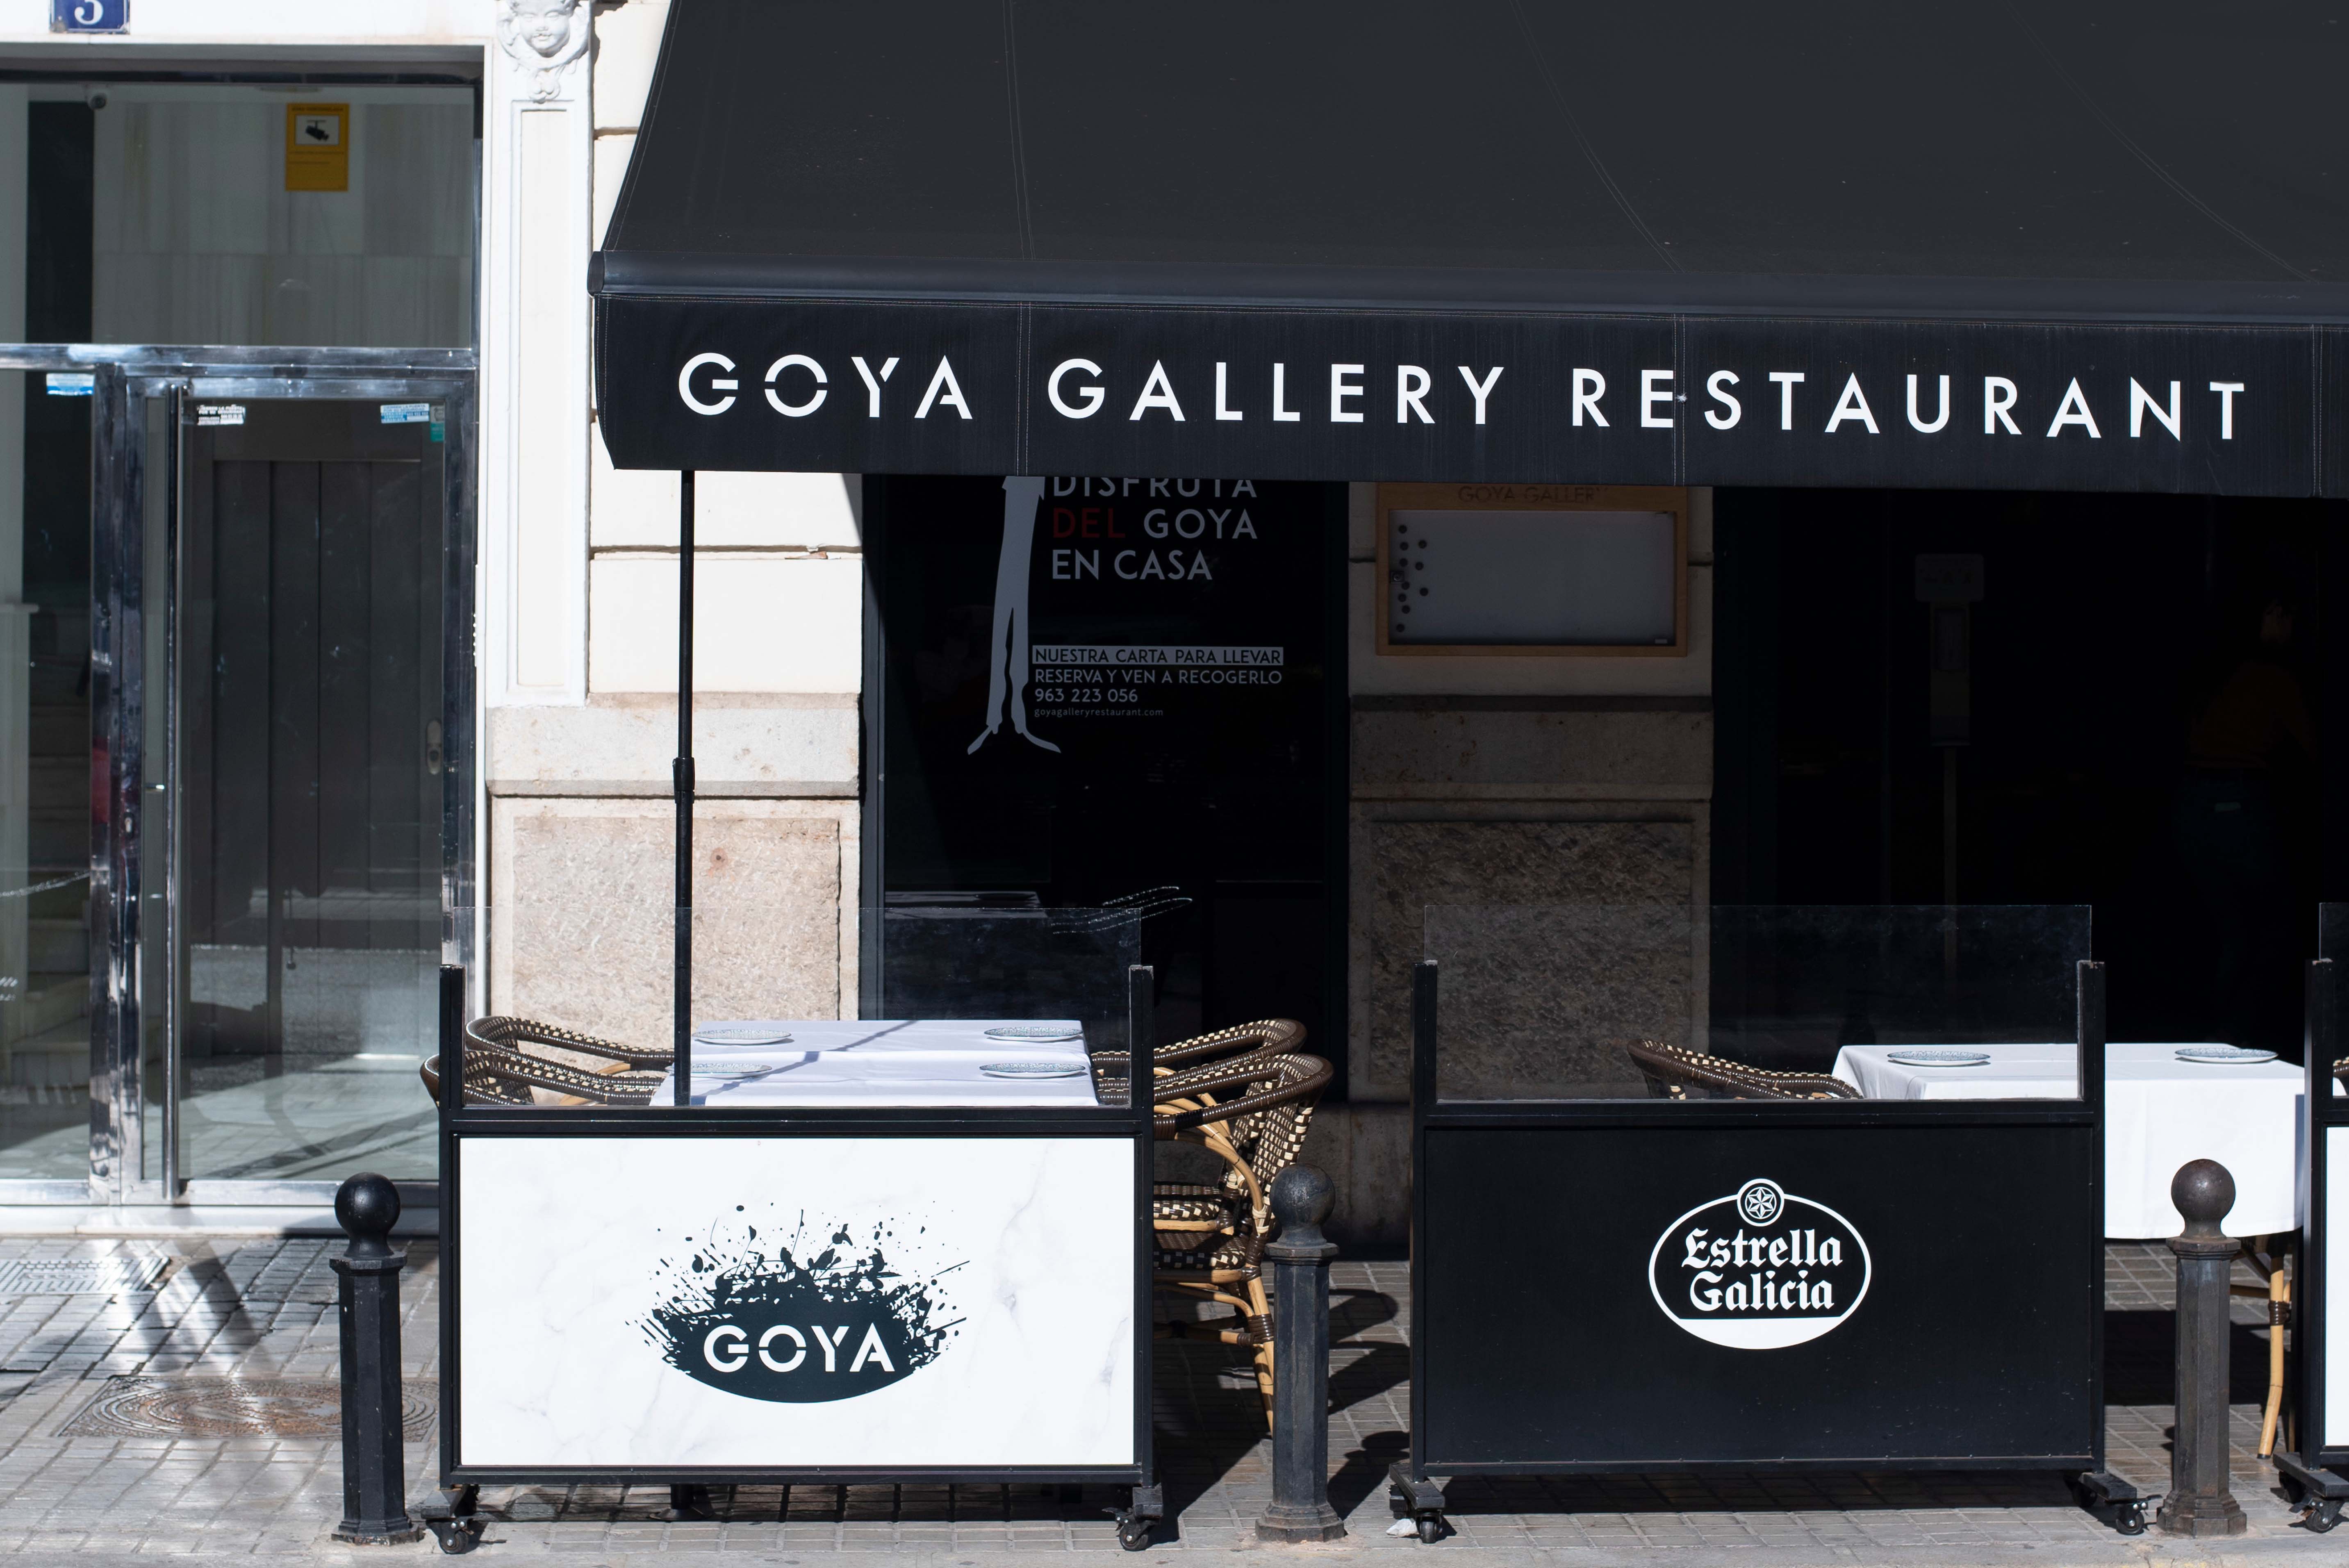 Goya Gallery